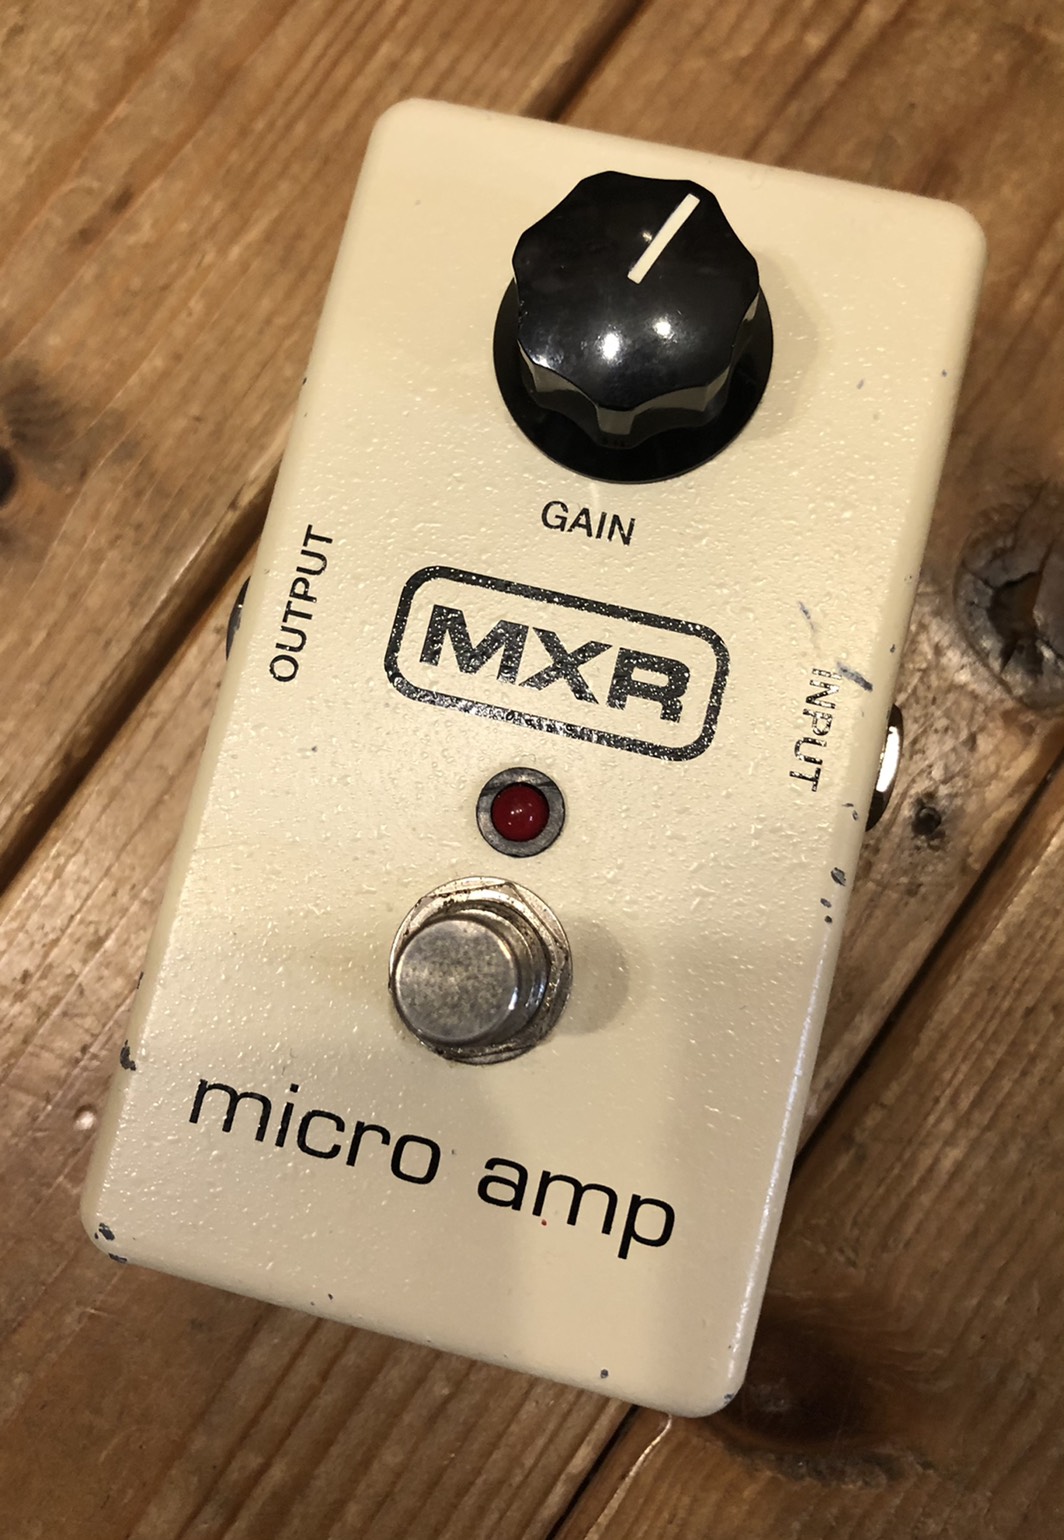 MXR micro amp | ギター屋funk ojisan